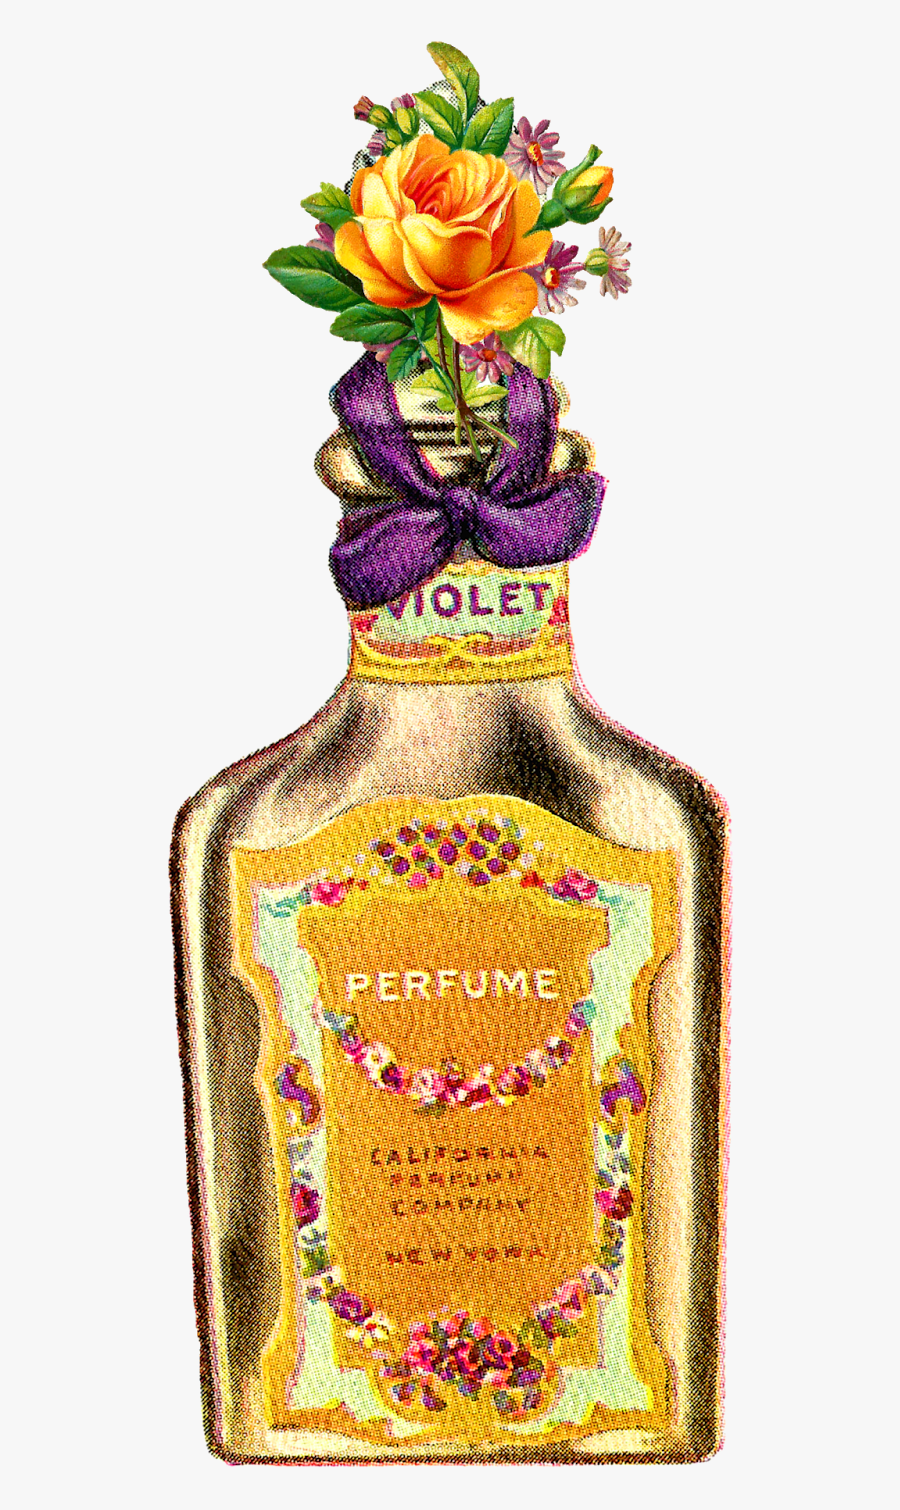 Vintage Perfume Png Pic - Perfume Bottle Illustration Png, Transparent Clipart